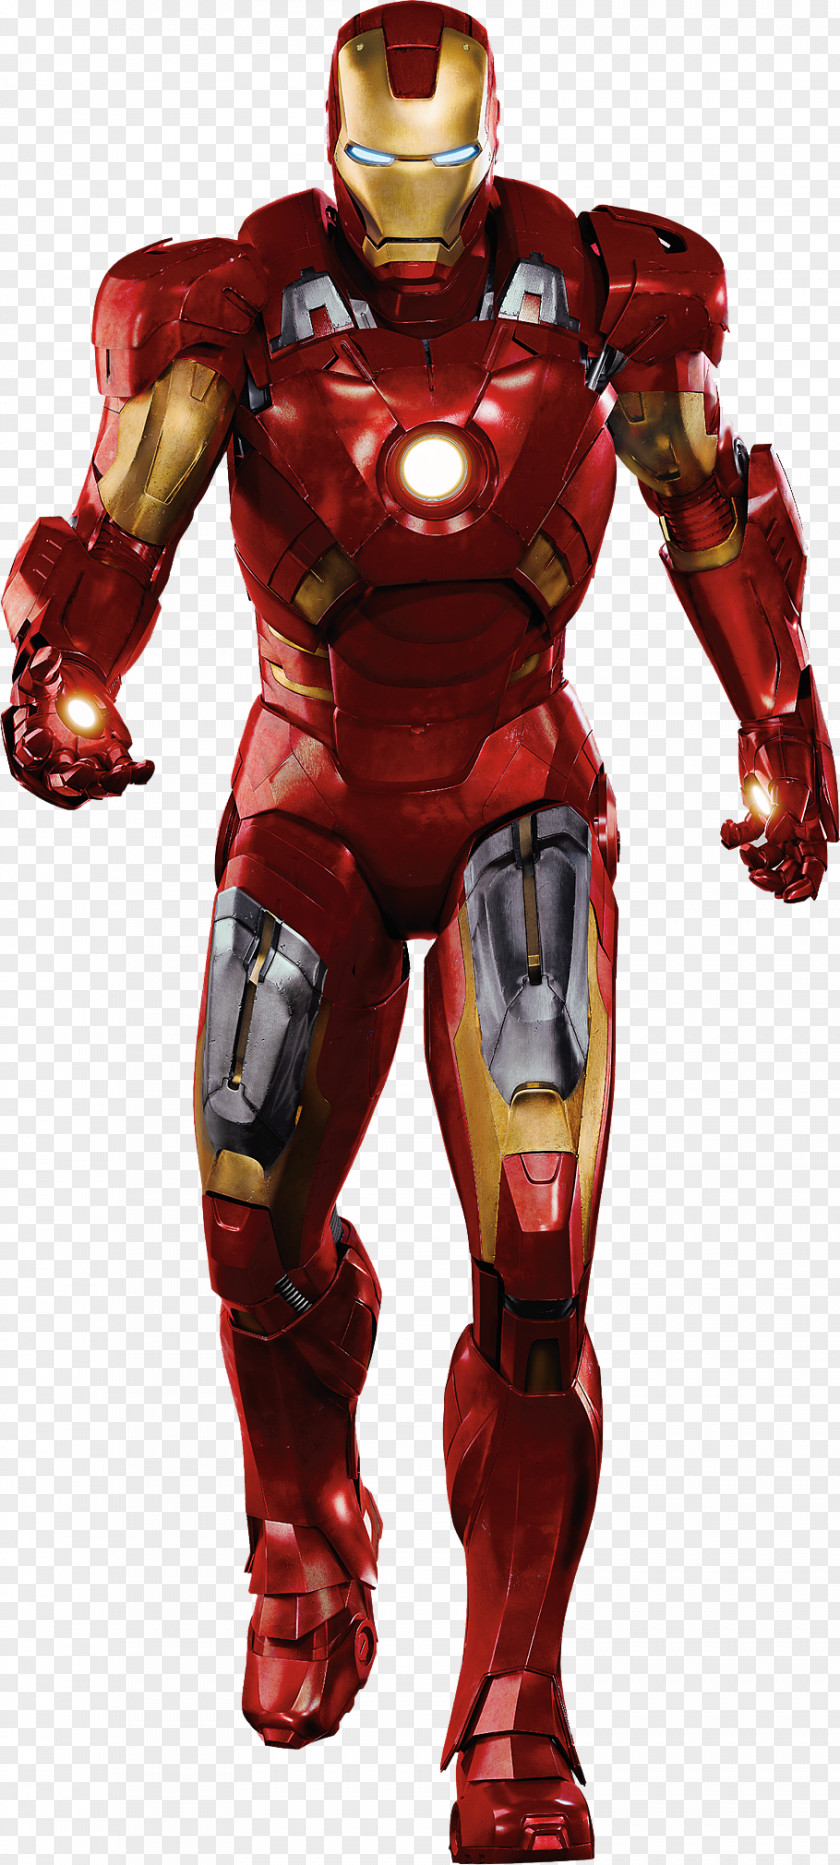 Iron Man Monger Clip Art Image PNG